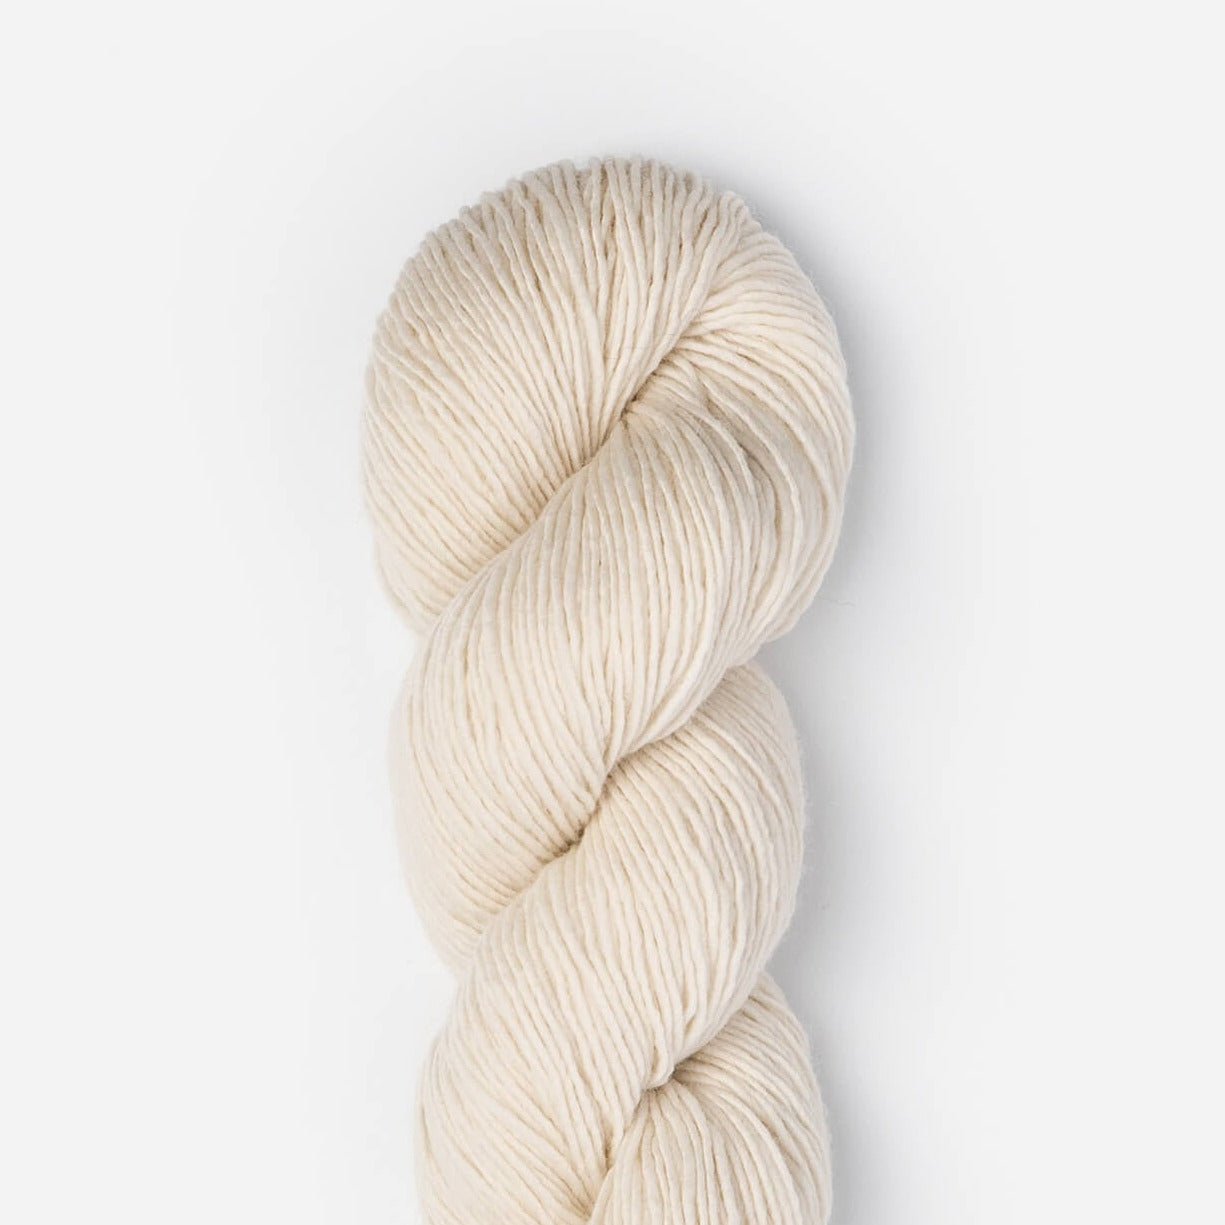 Shop Knitting and Crochet Yarn – Tagged Wool – The Little Yarn Store